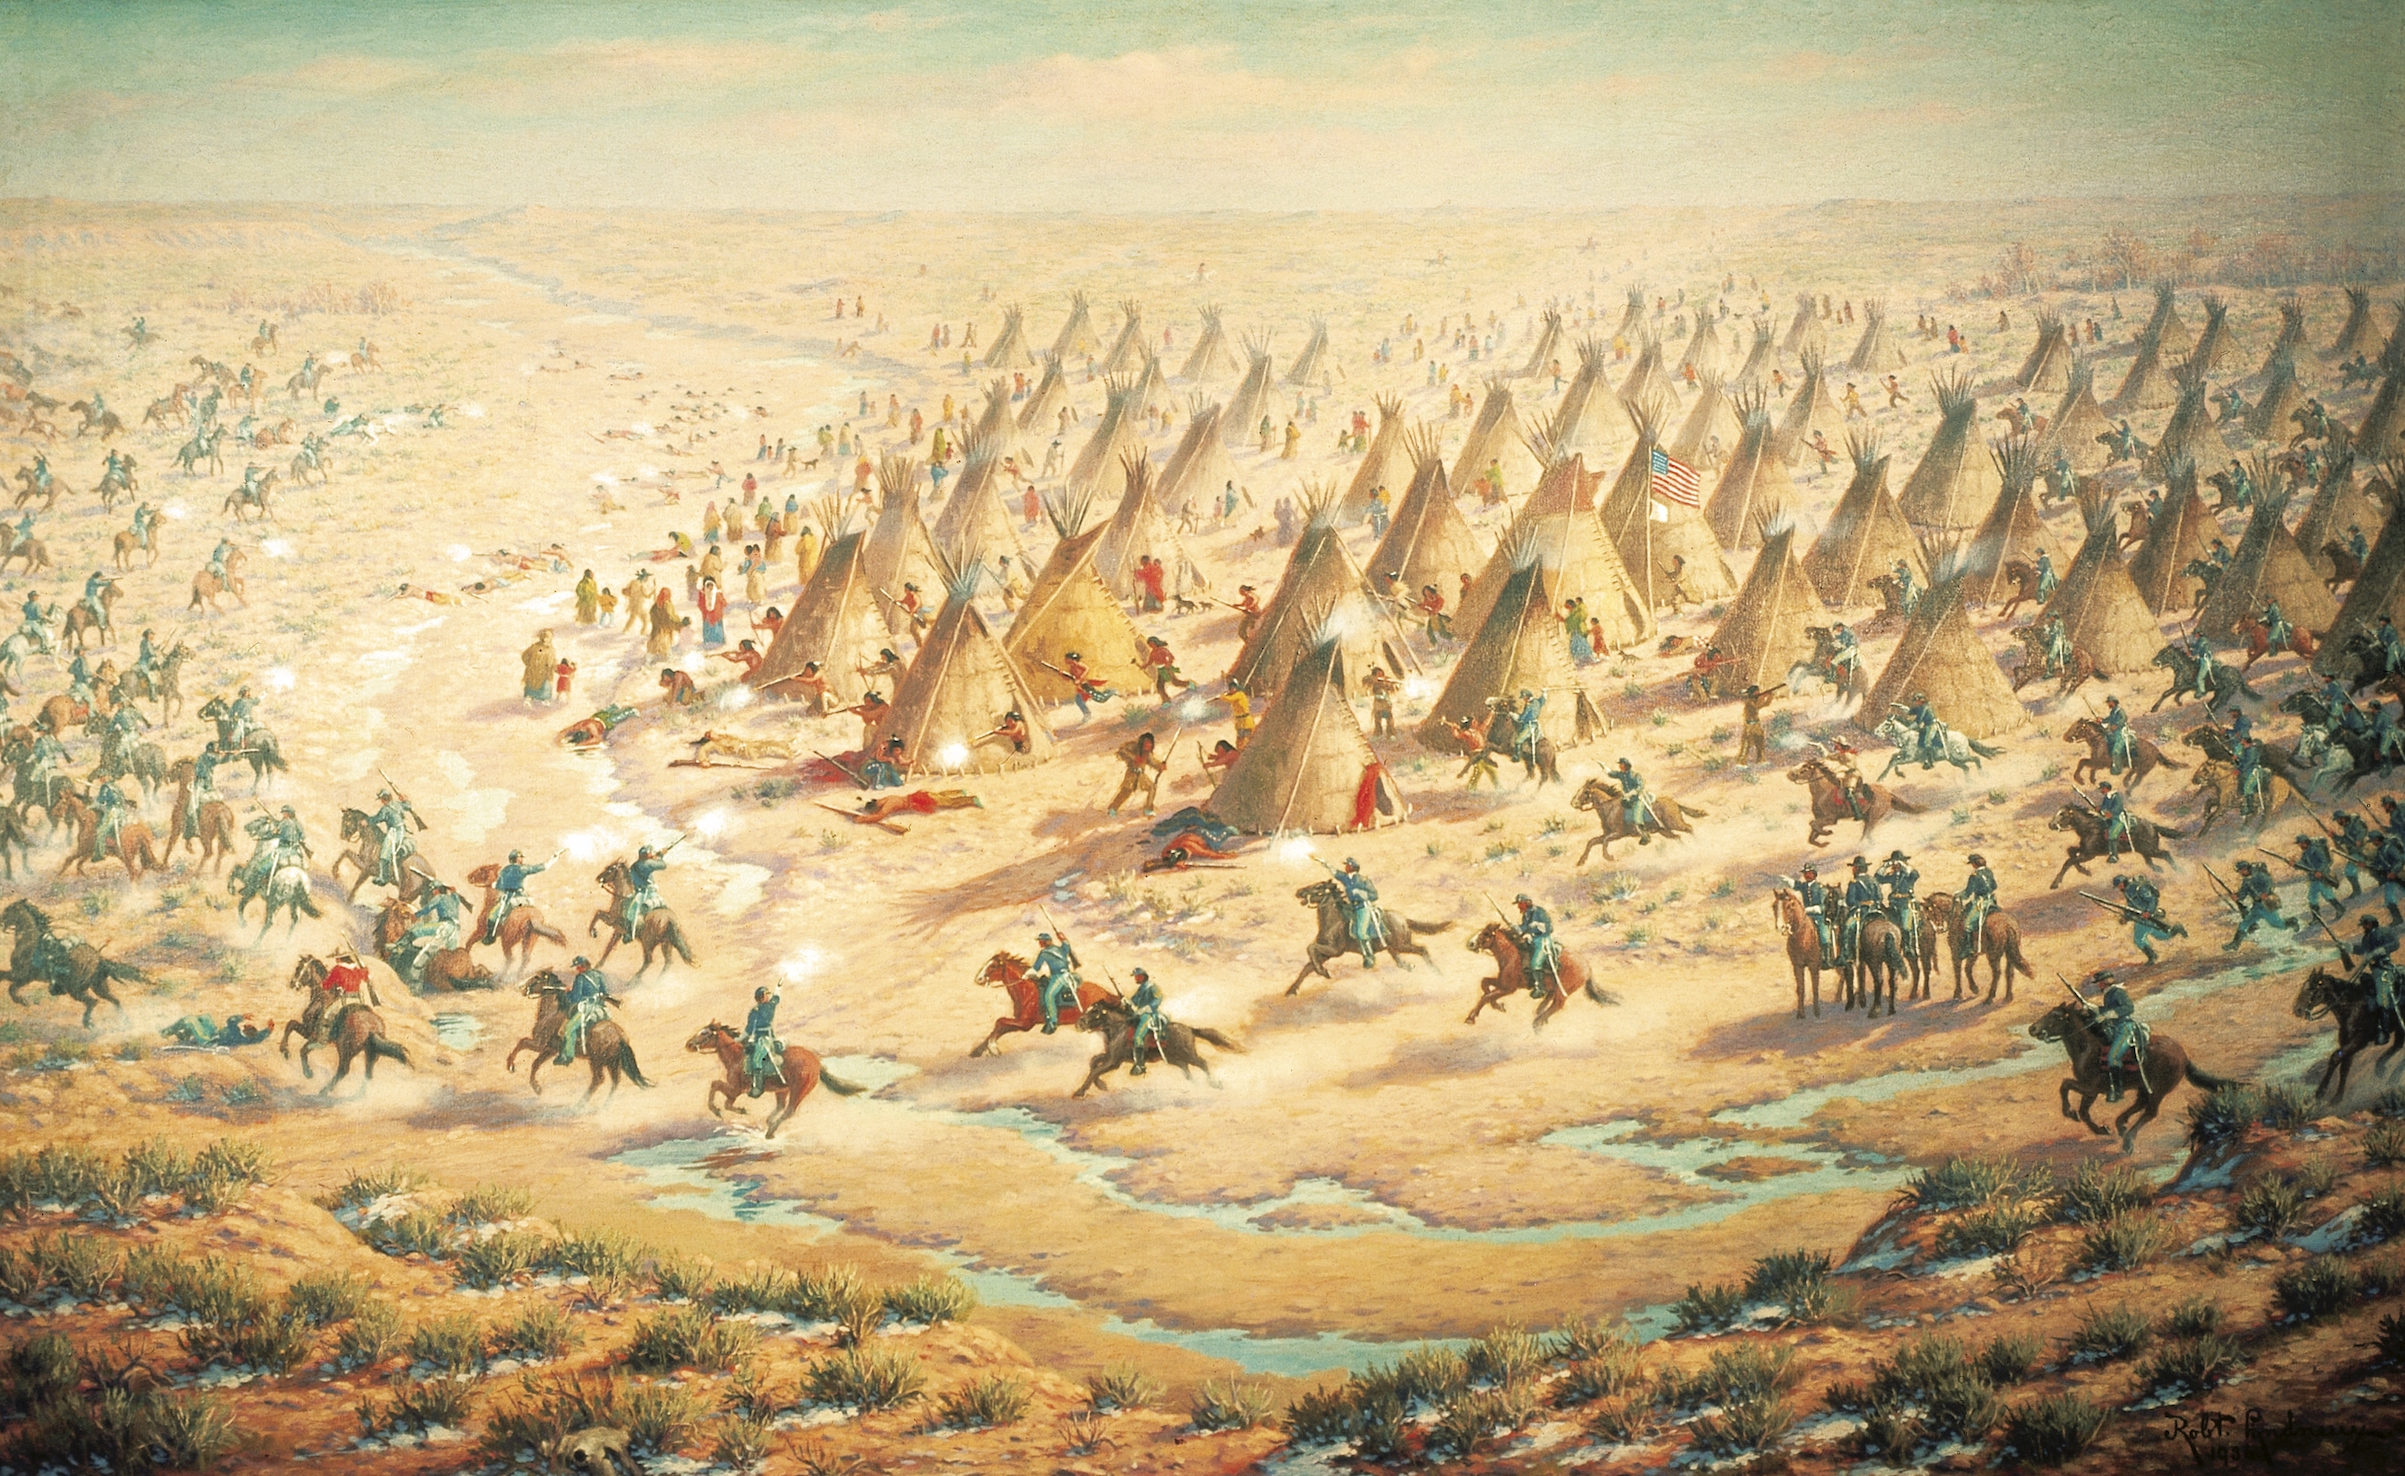 Sand Creek Massacre, Nov. 29, 1864, by Robert Lindneux. (De Agostini via Getty Images)